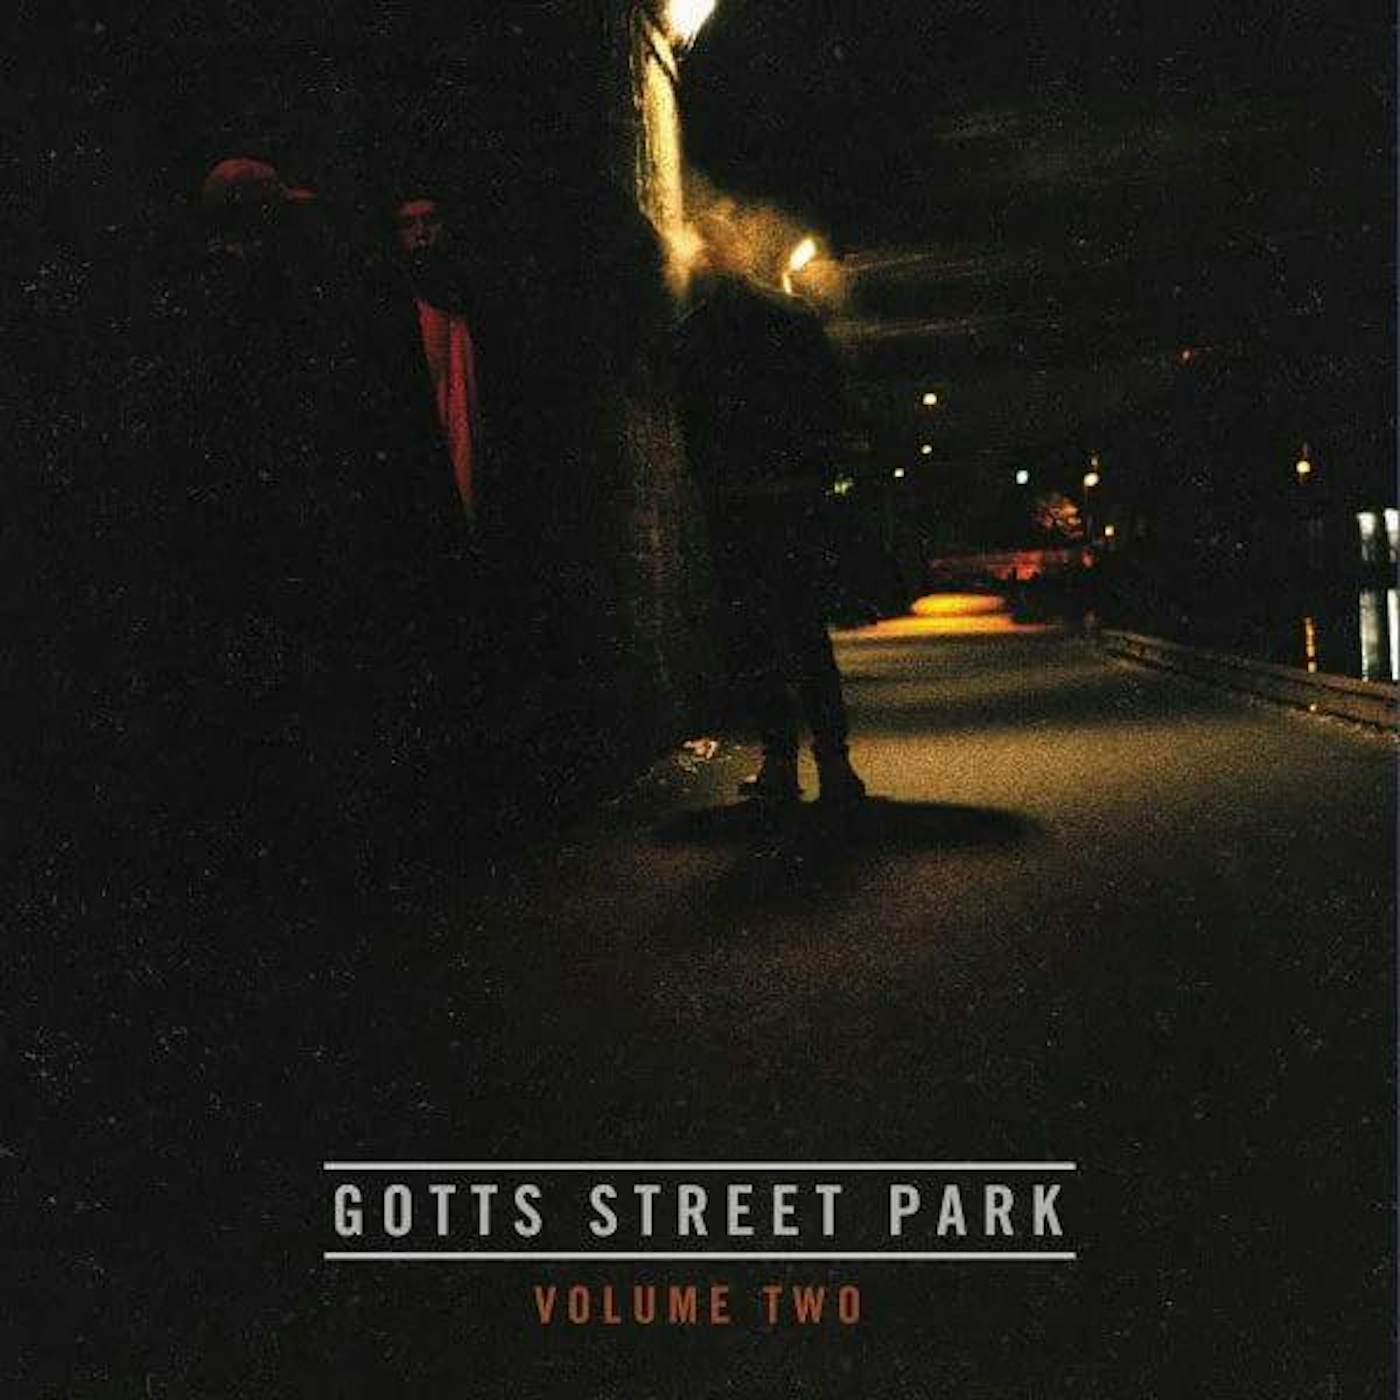 Gotts Street Park VOL. 2 CD